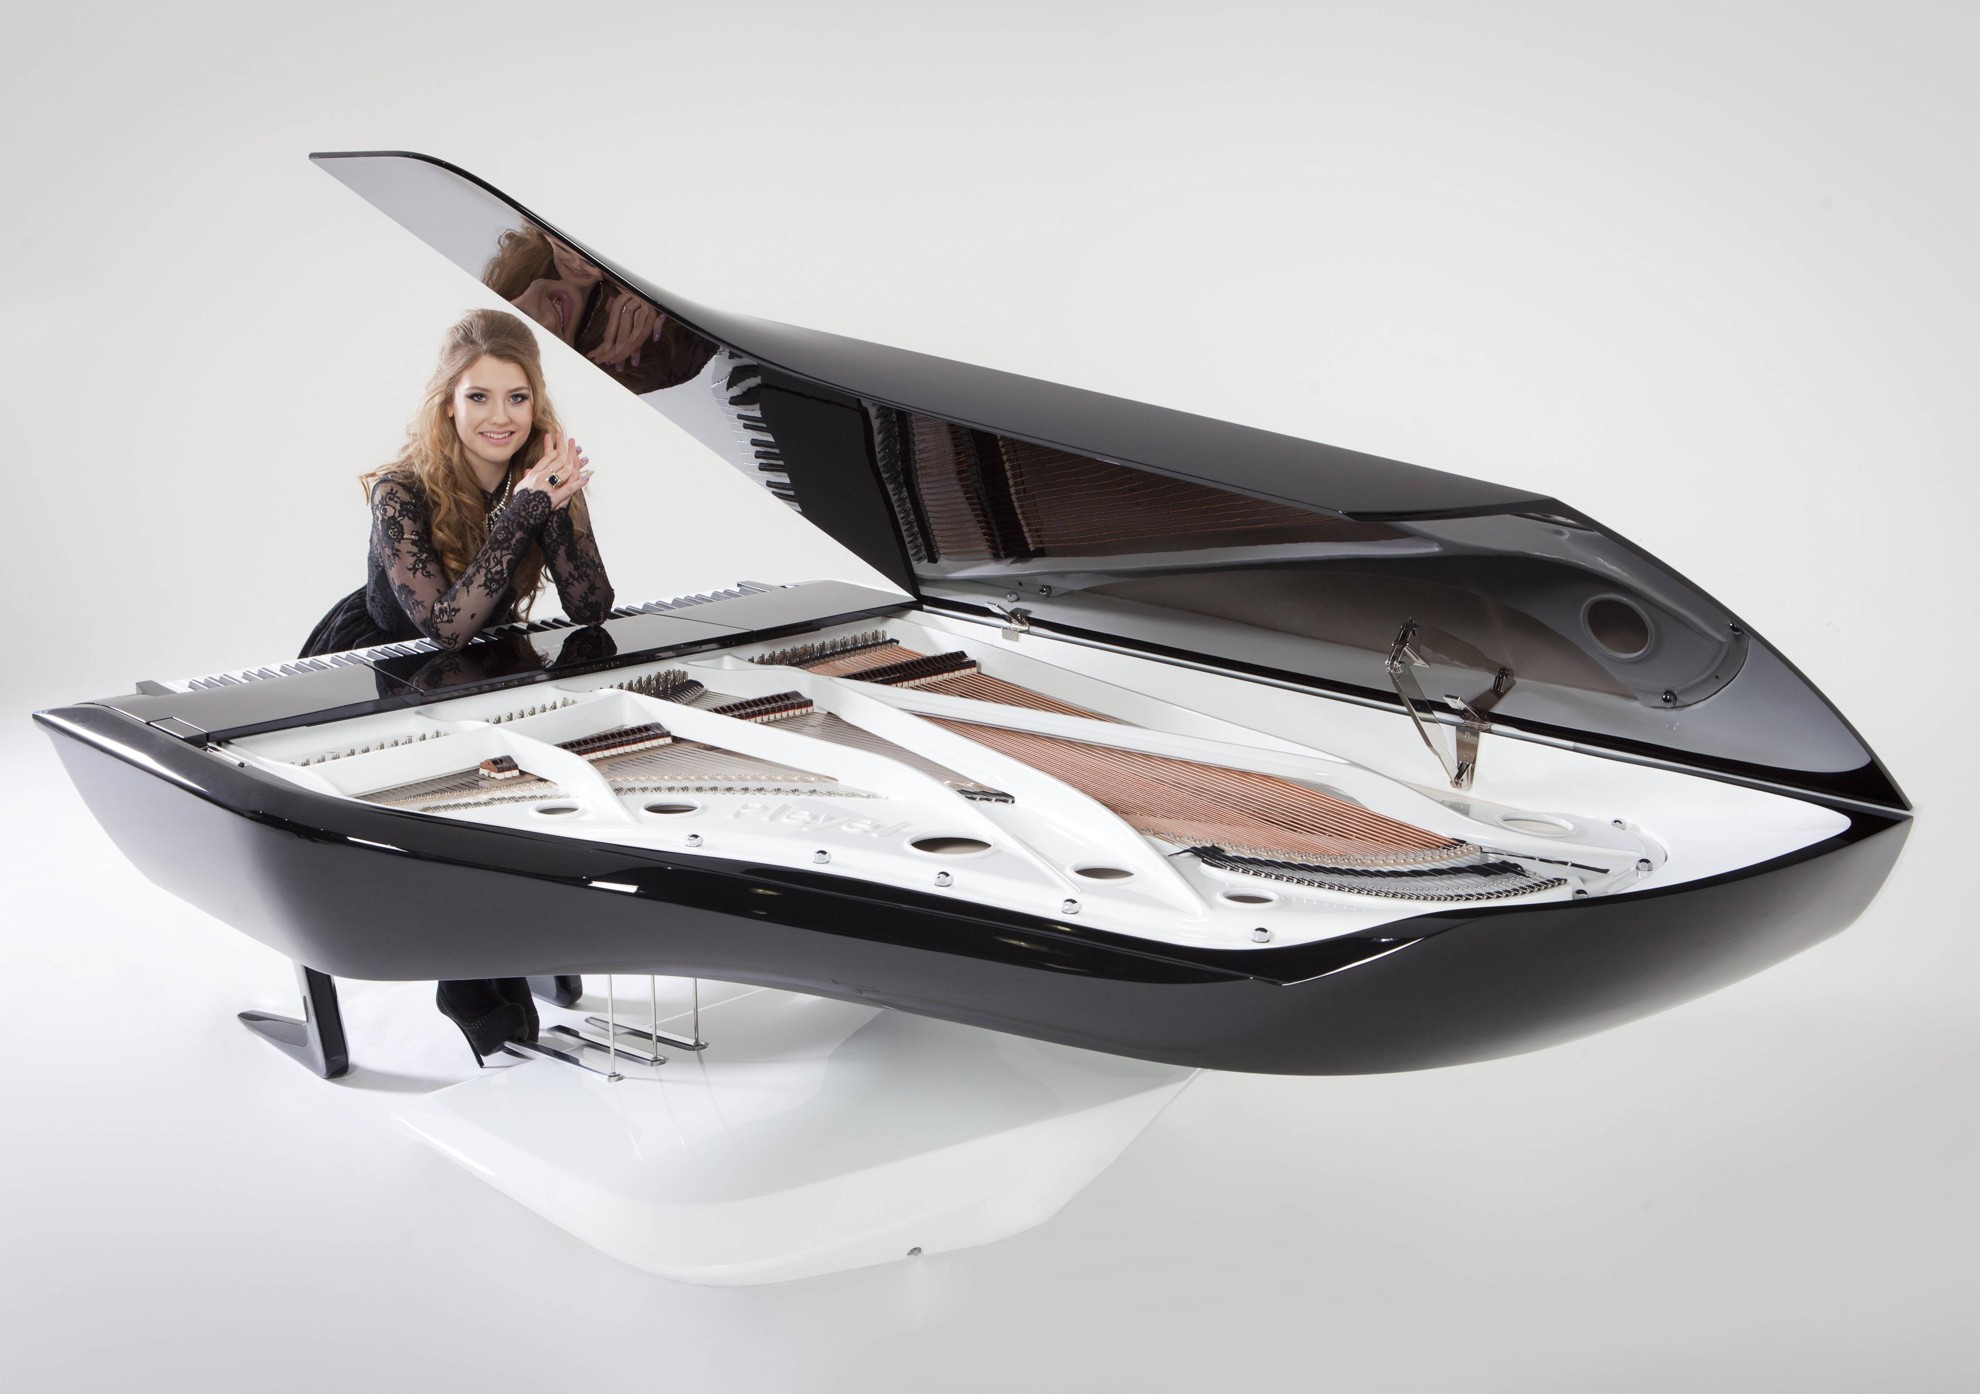 X Factor sensation Ella Henderson debuted the Peugeot Design Lab Pleyel piano